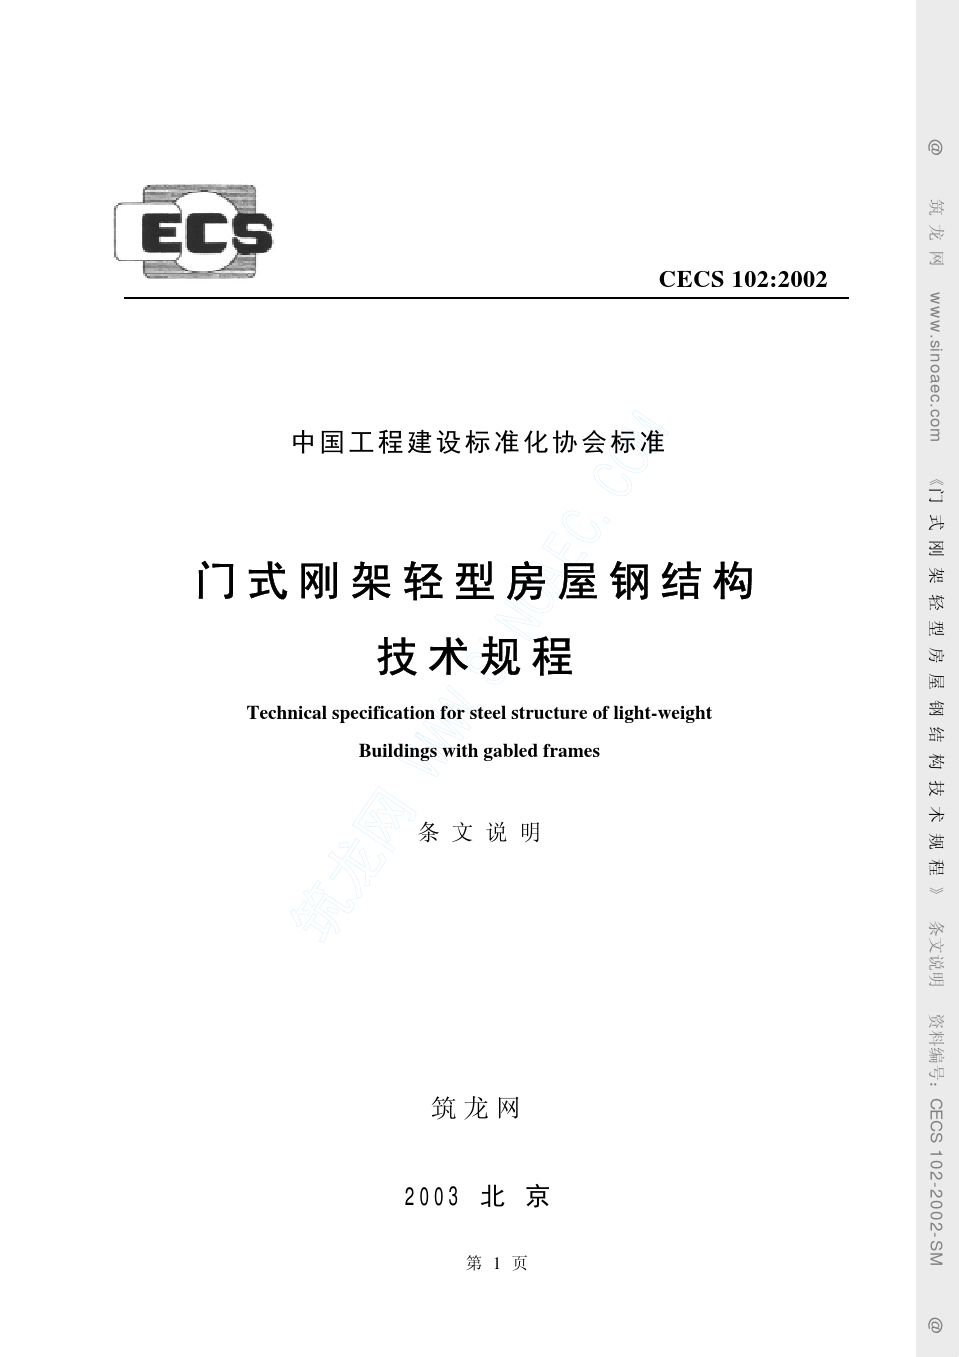 CECS_102-2002门式刚架轻型房屋钢结构技术规程(条文说明)